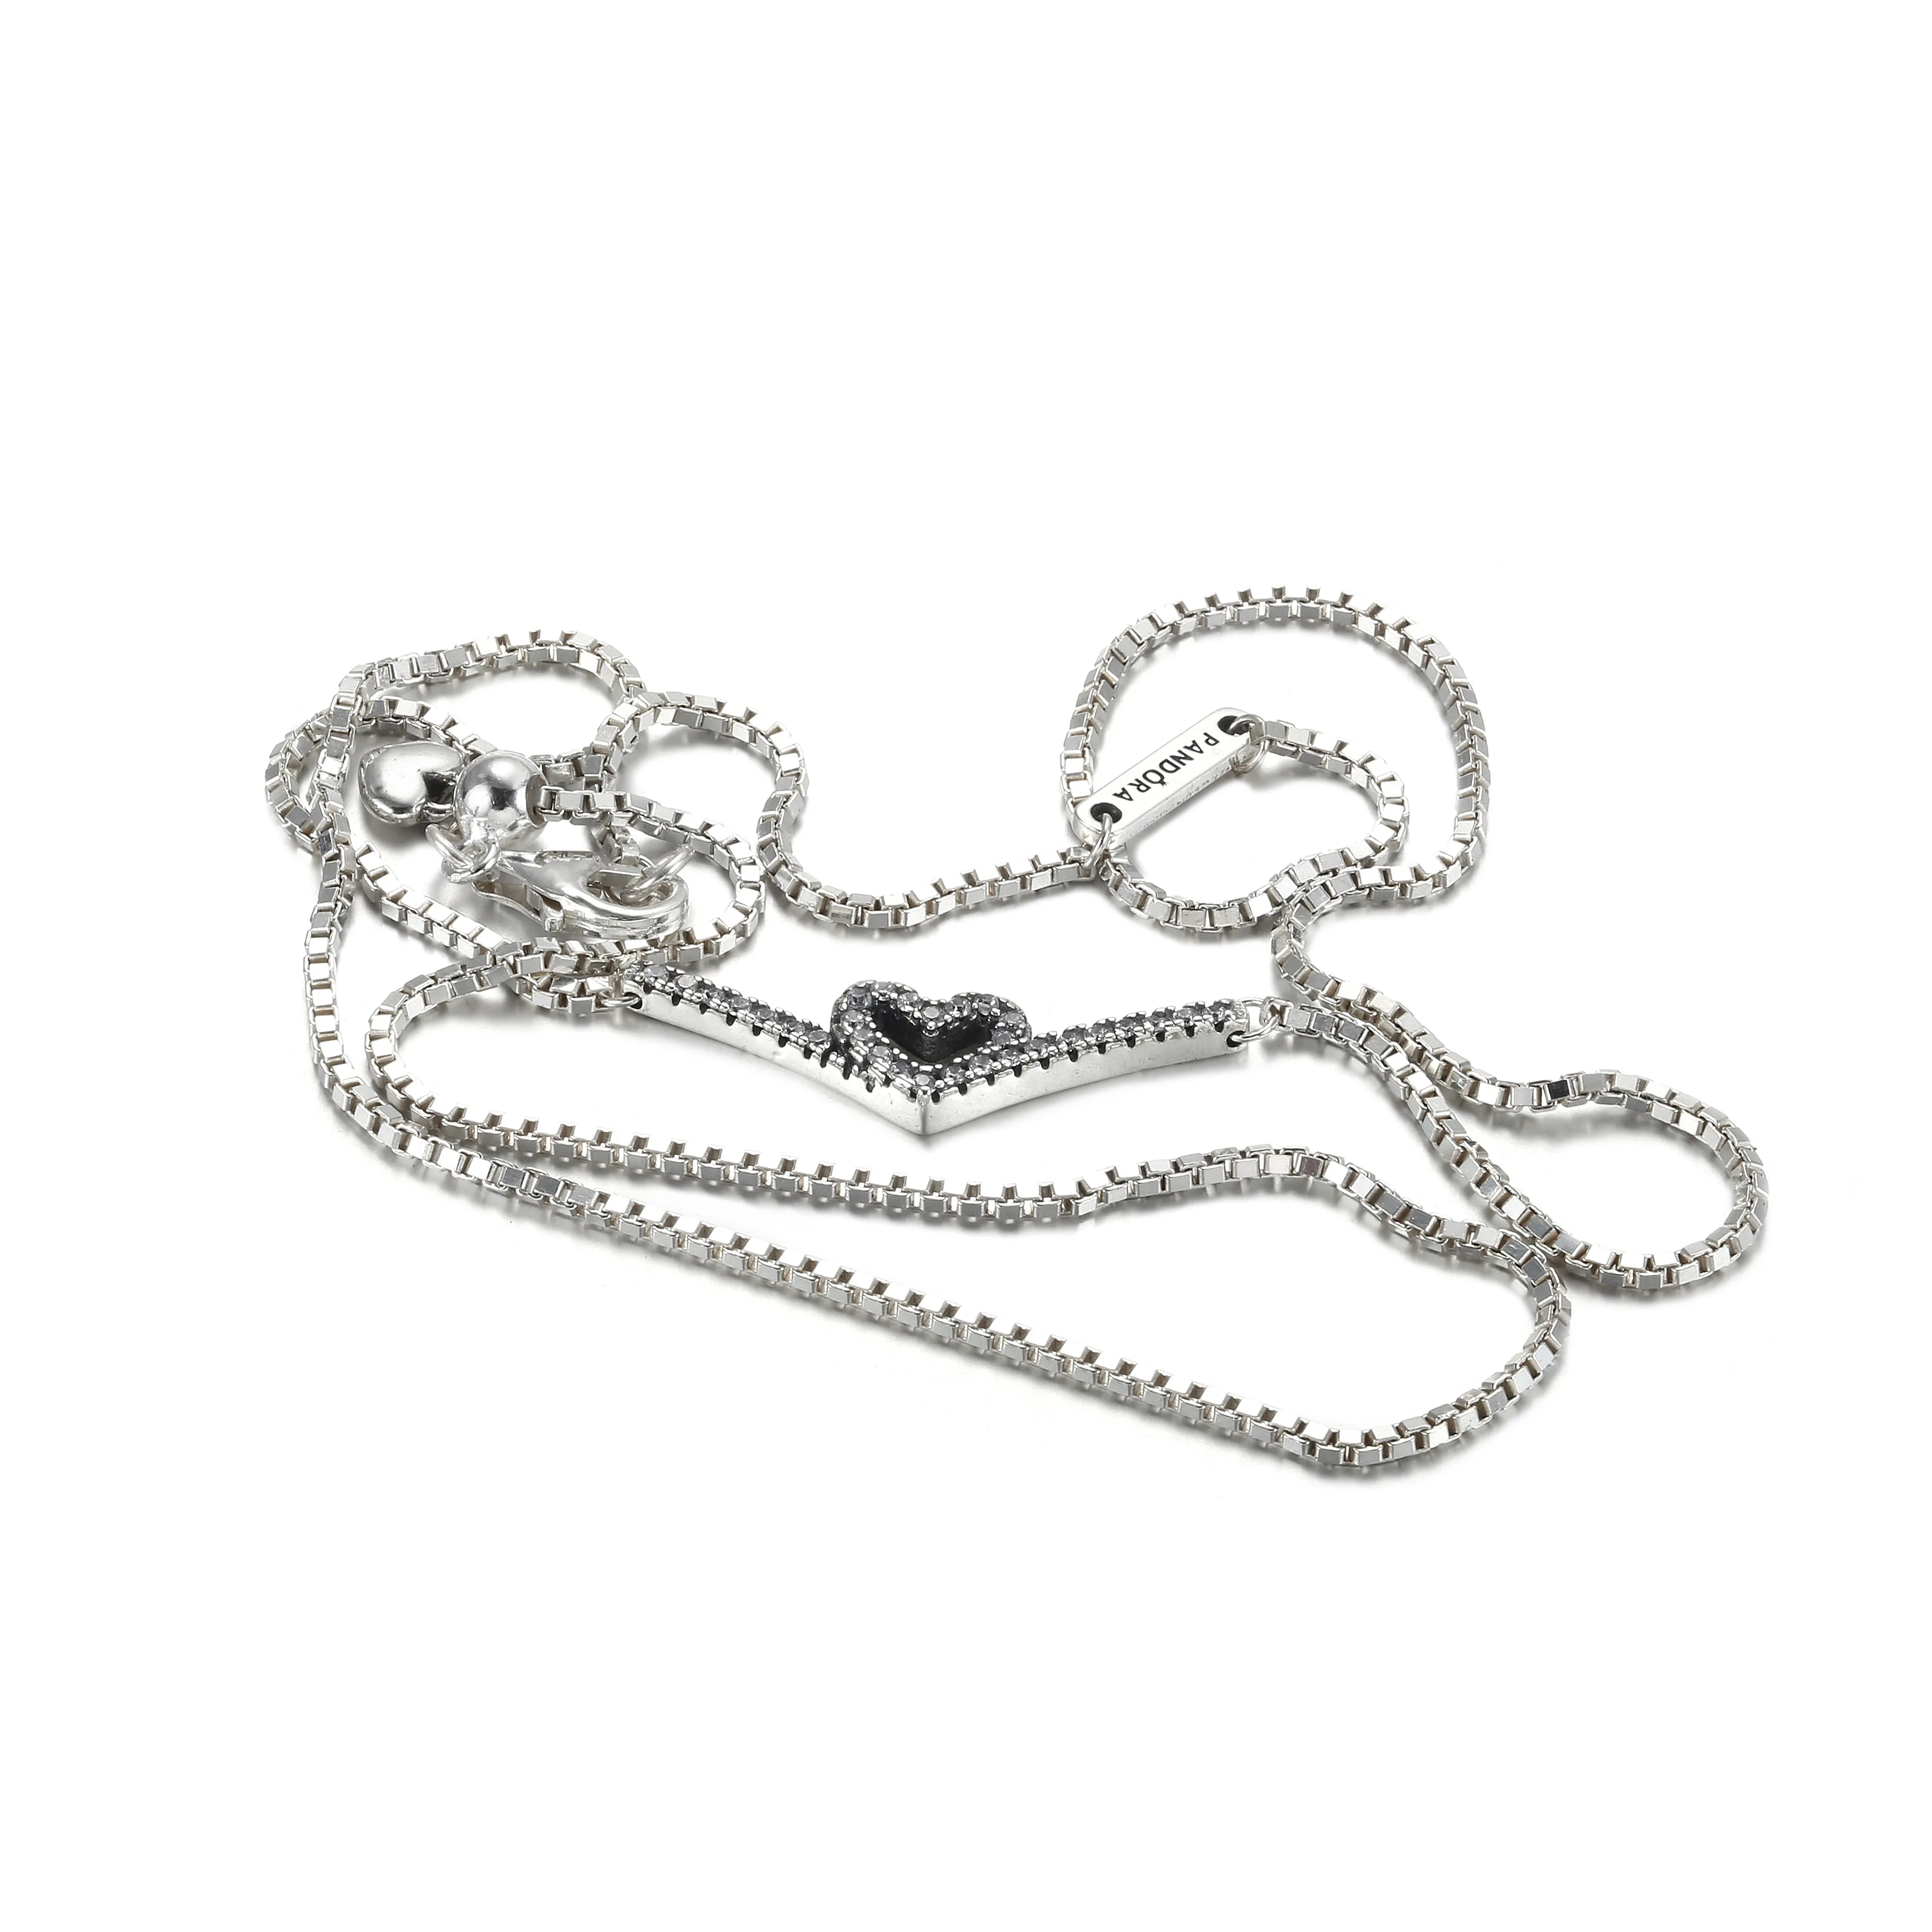 Colier Pandora cu Spumant Wishbone Heart din argint - 399273C01